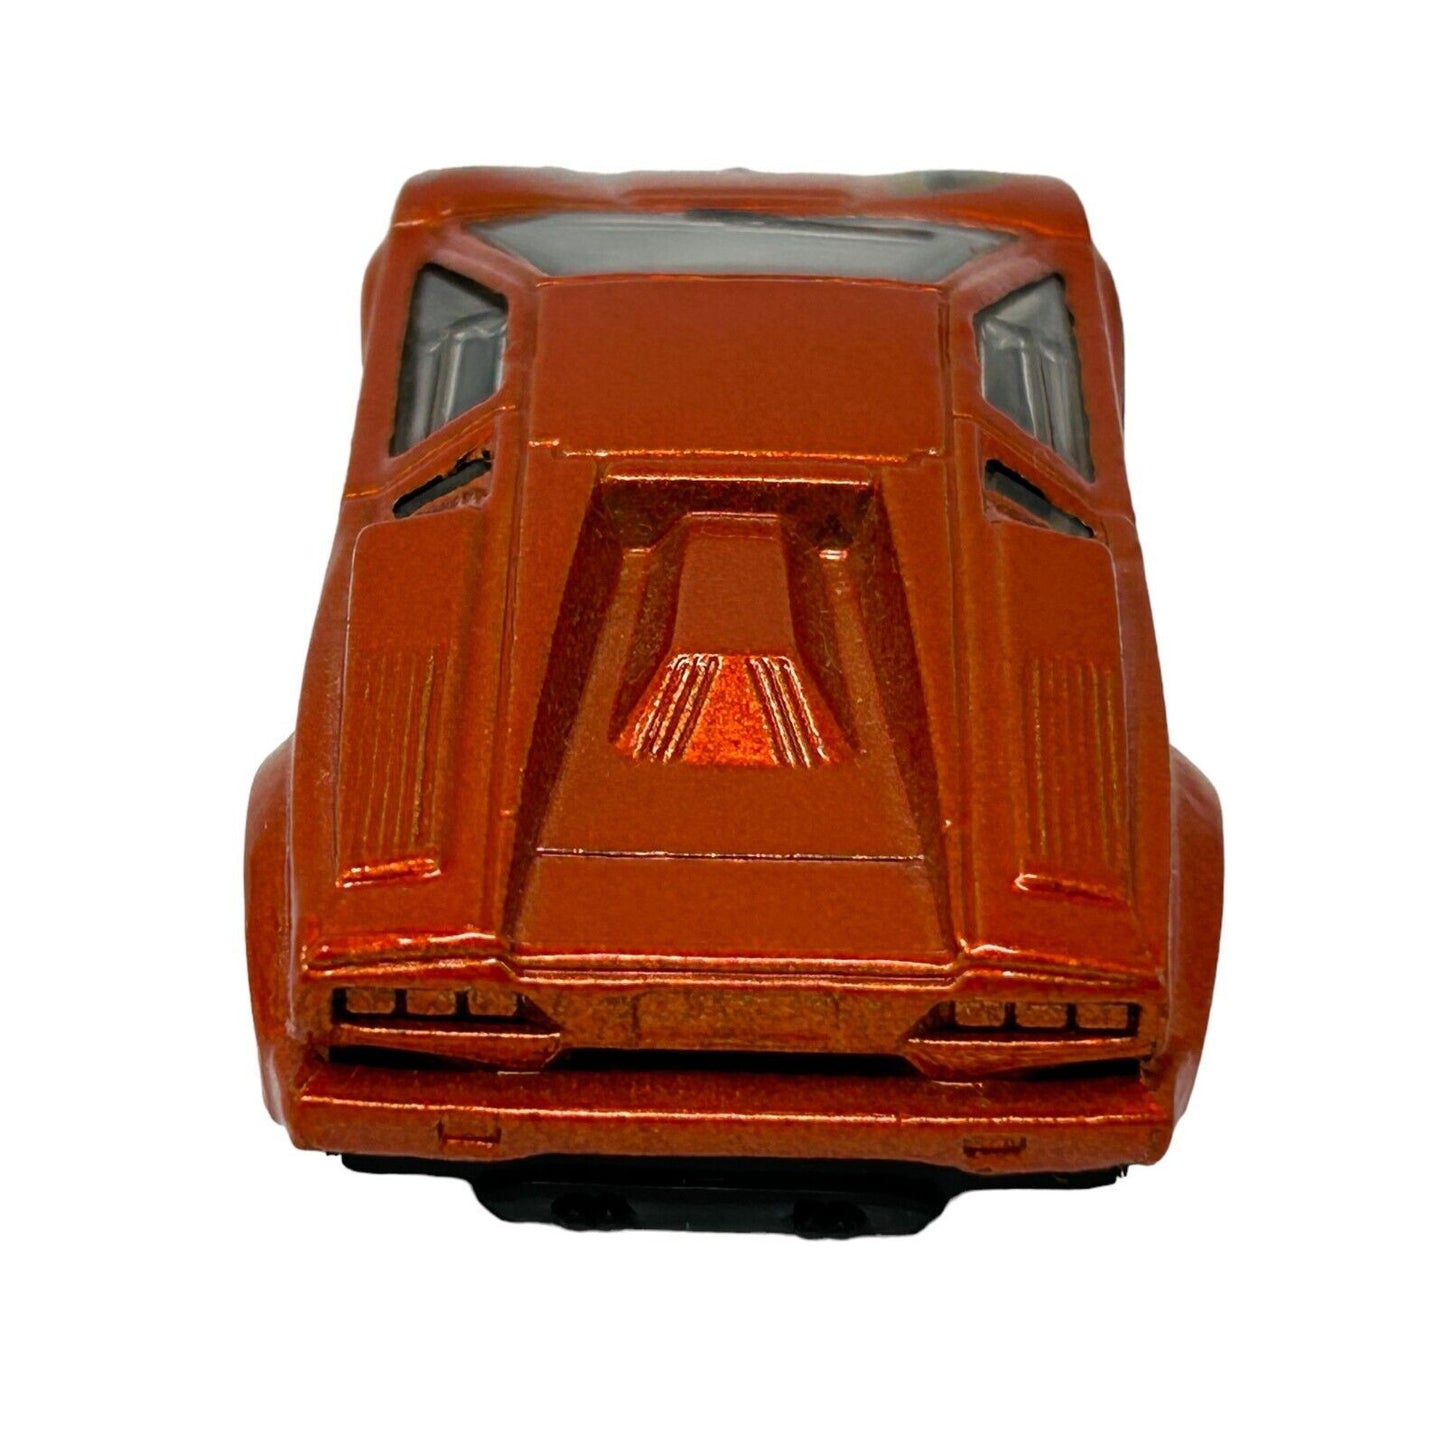 Lamborghini Countach Hot Wheels Collectible Diecast Car Orange Toy Vehicle